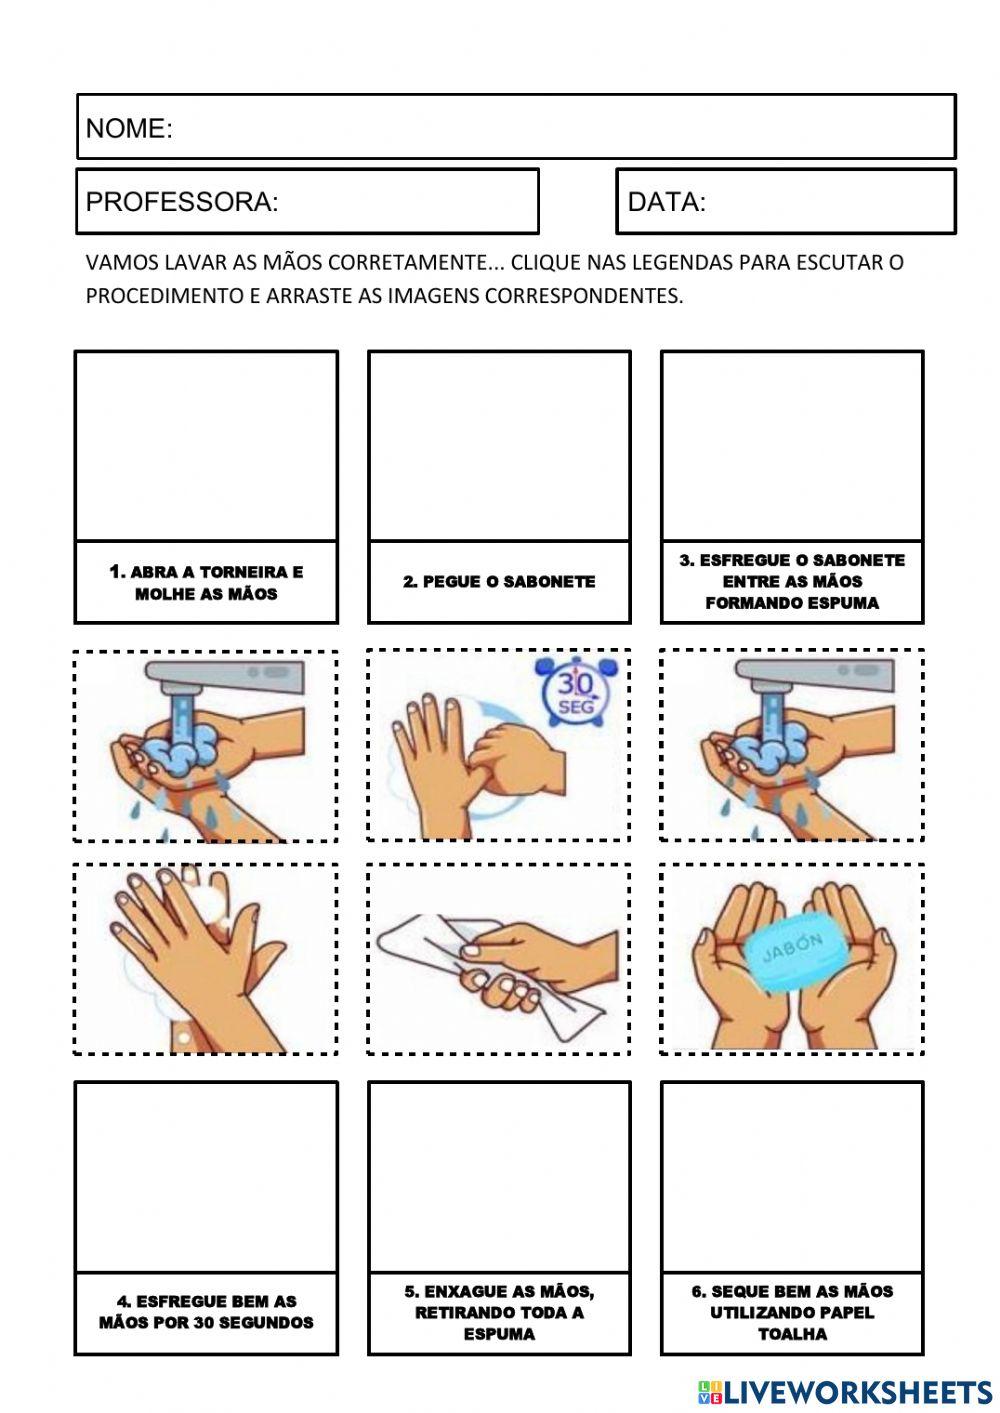 Higiene: Lavar as mãos